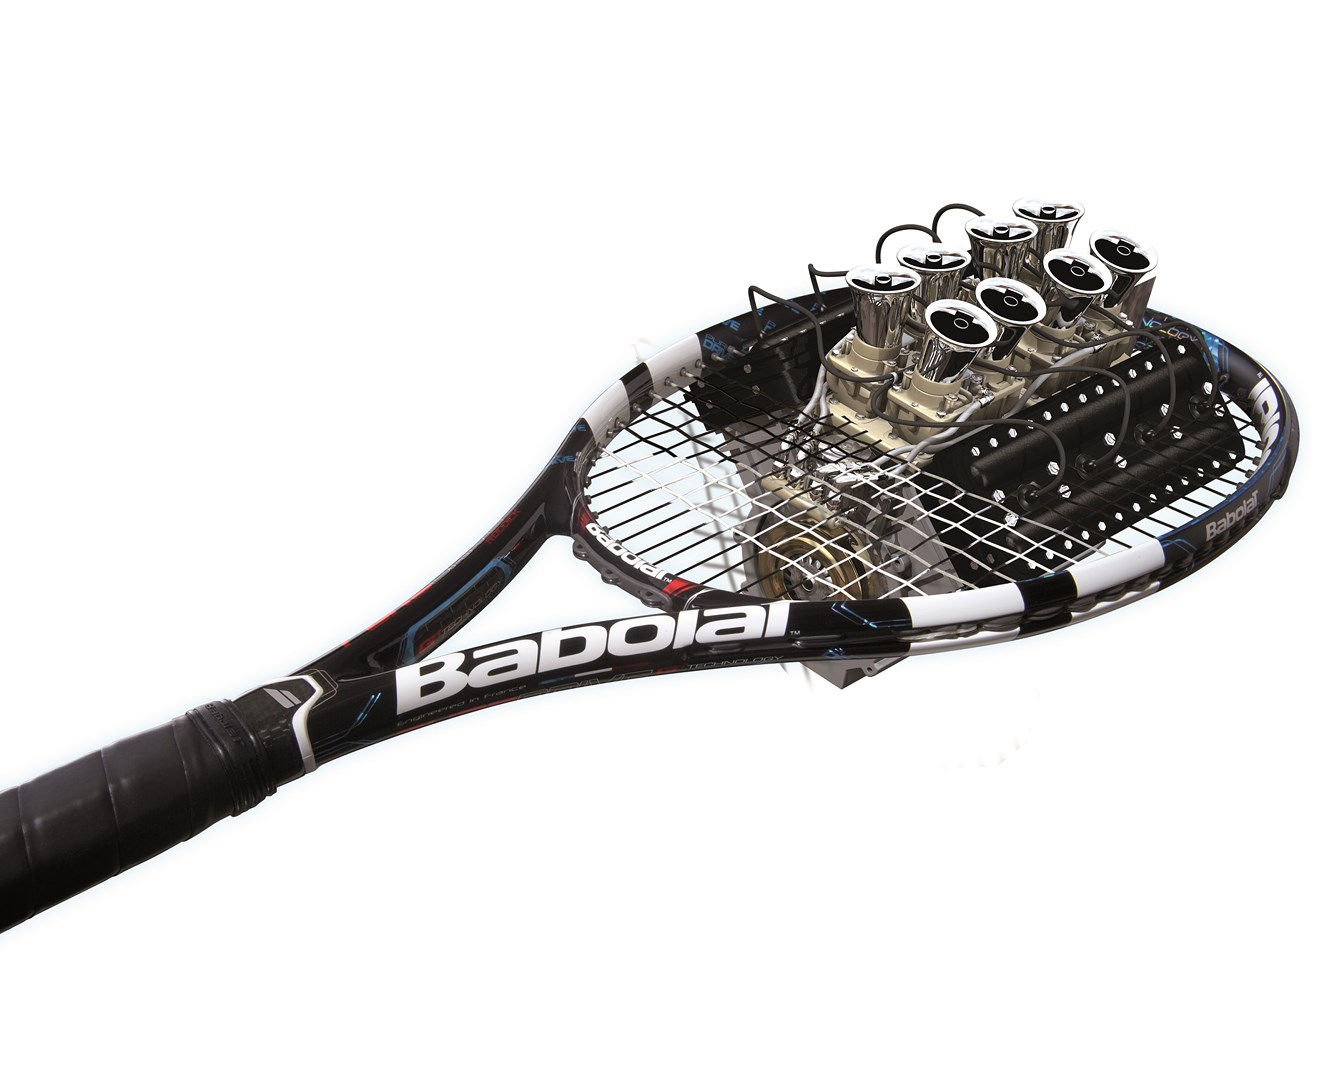 Machine de cordage de raquettes de tennis Maroc